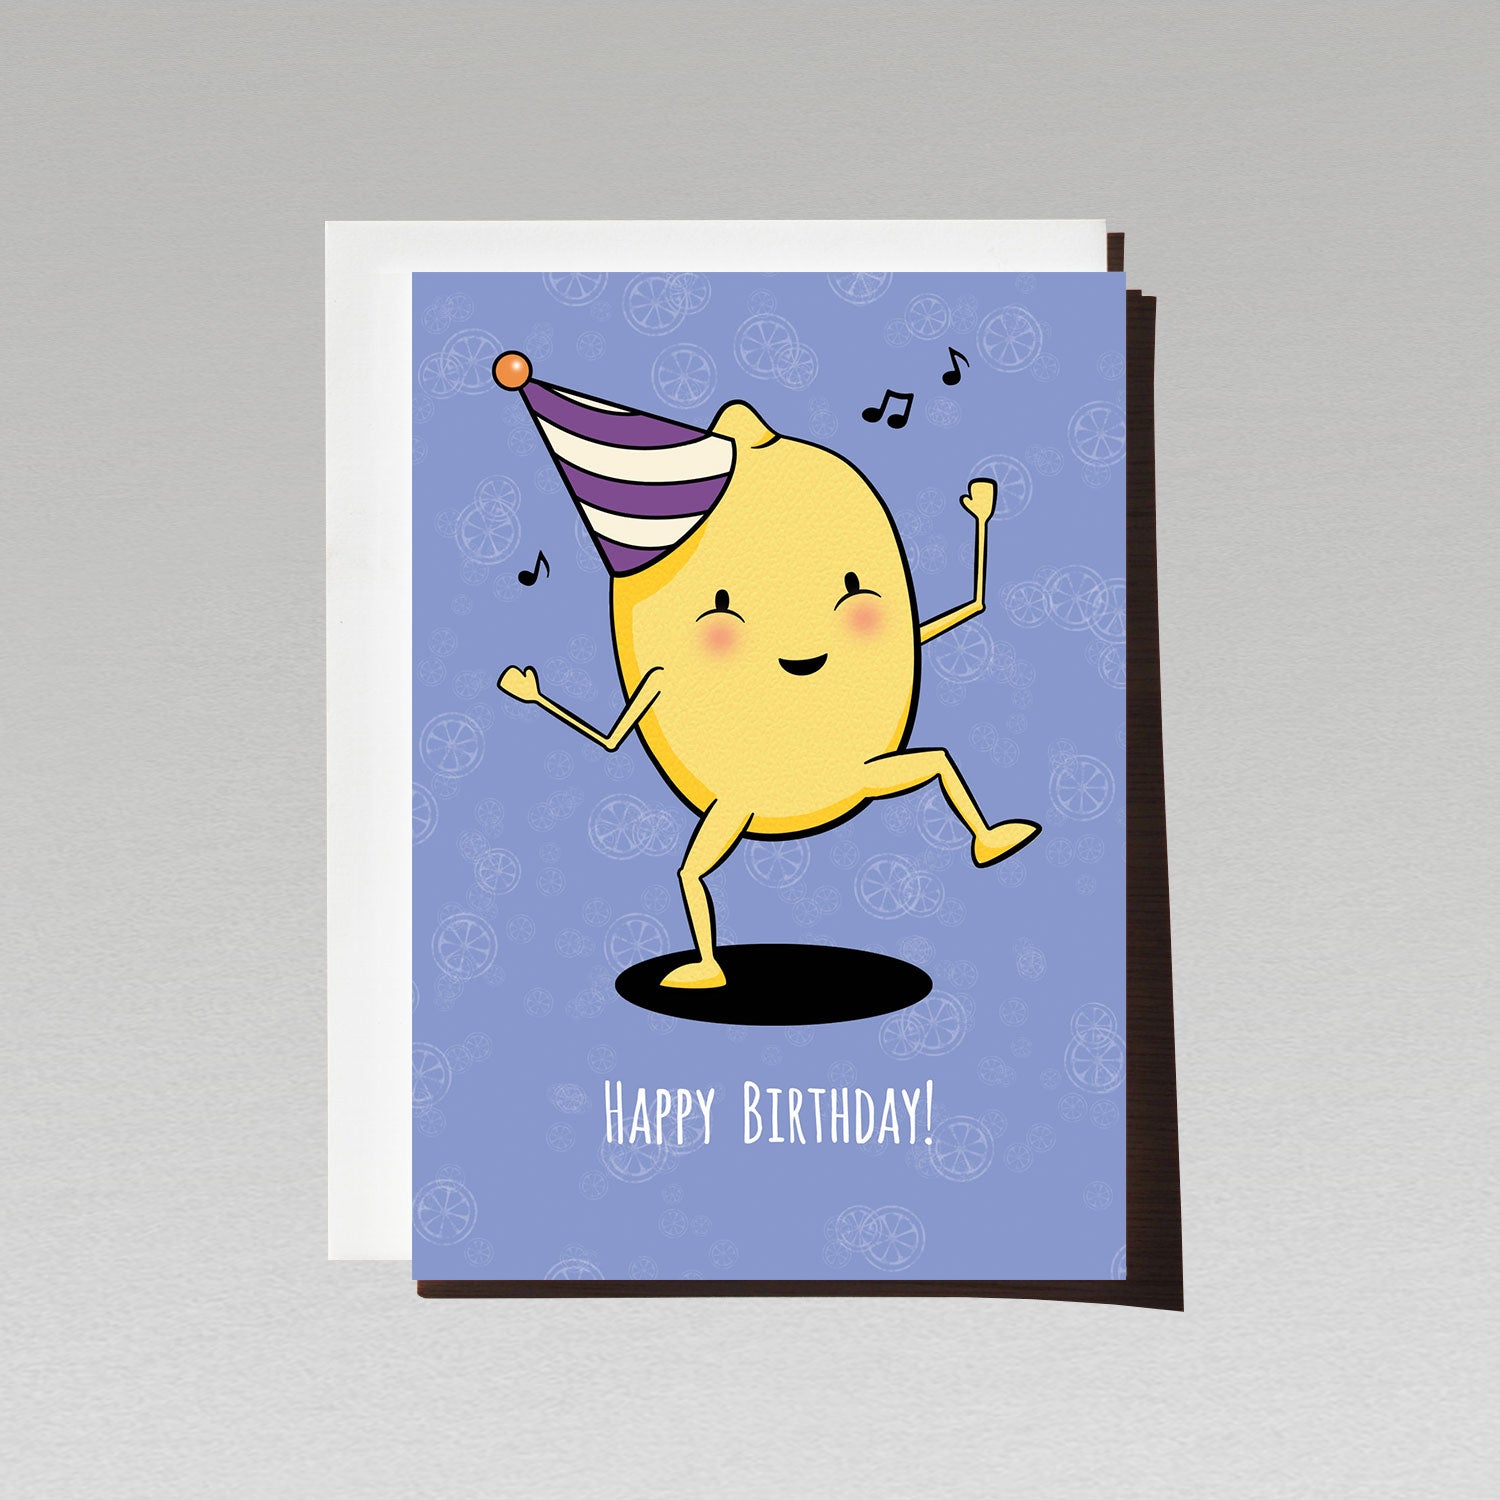 Lemon party birthday greeting card